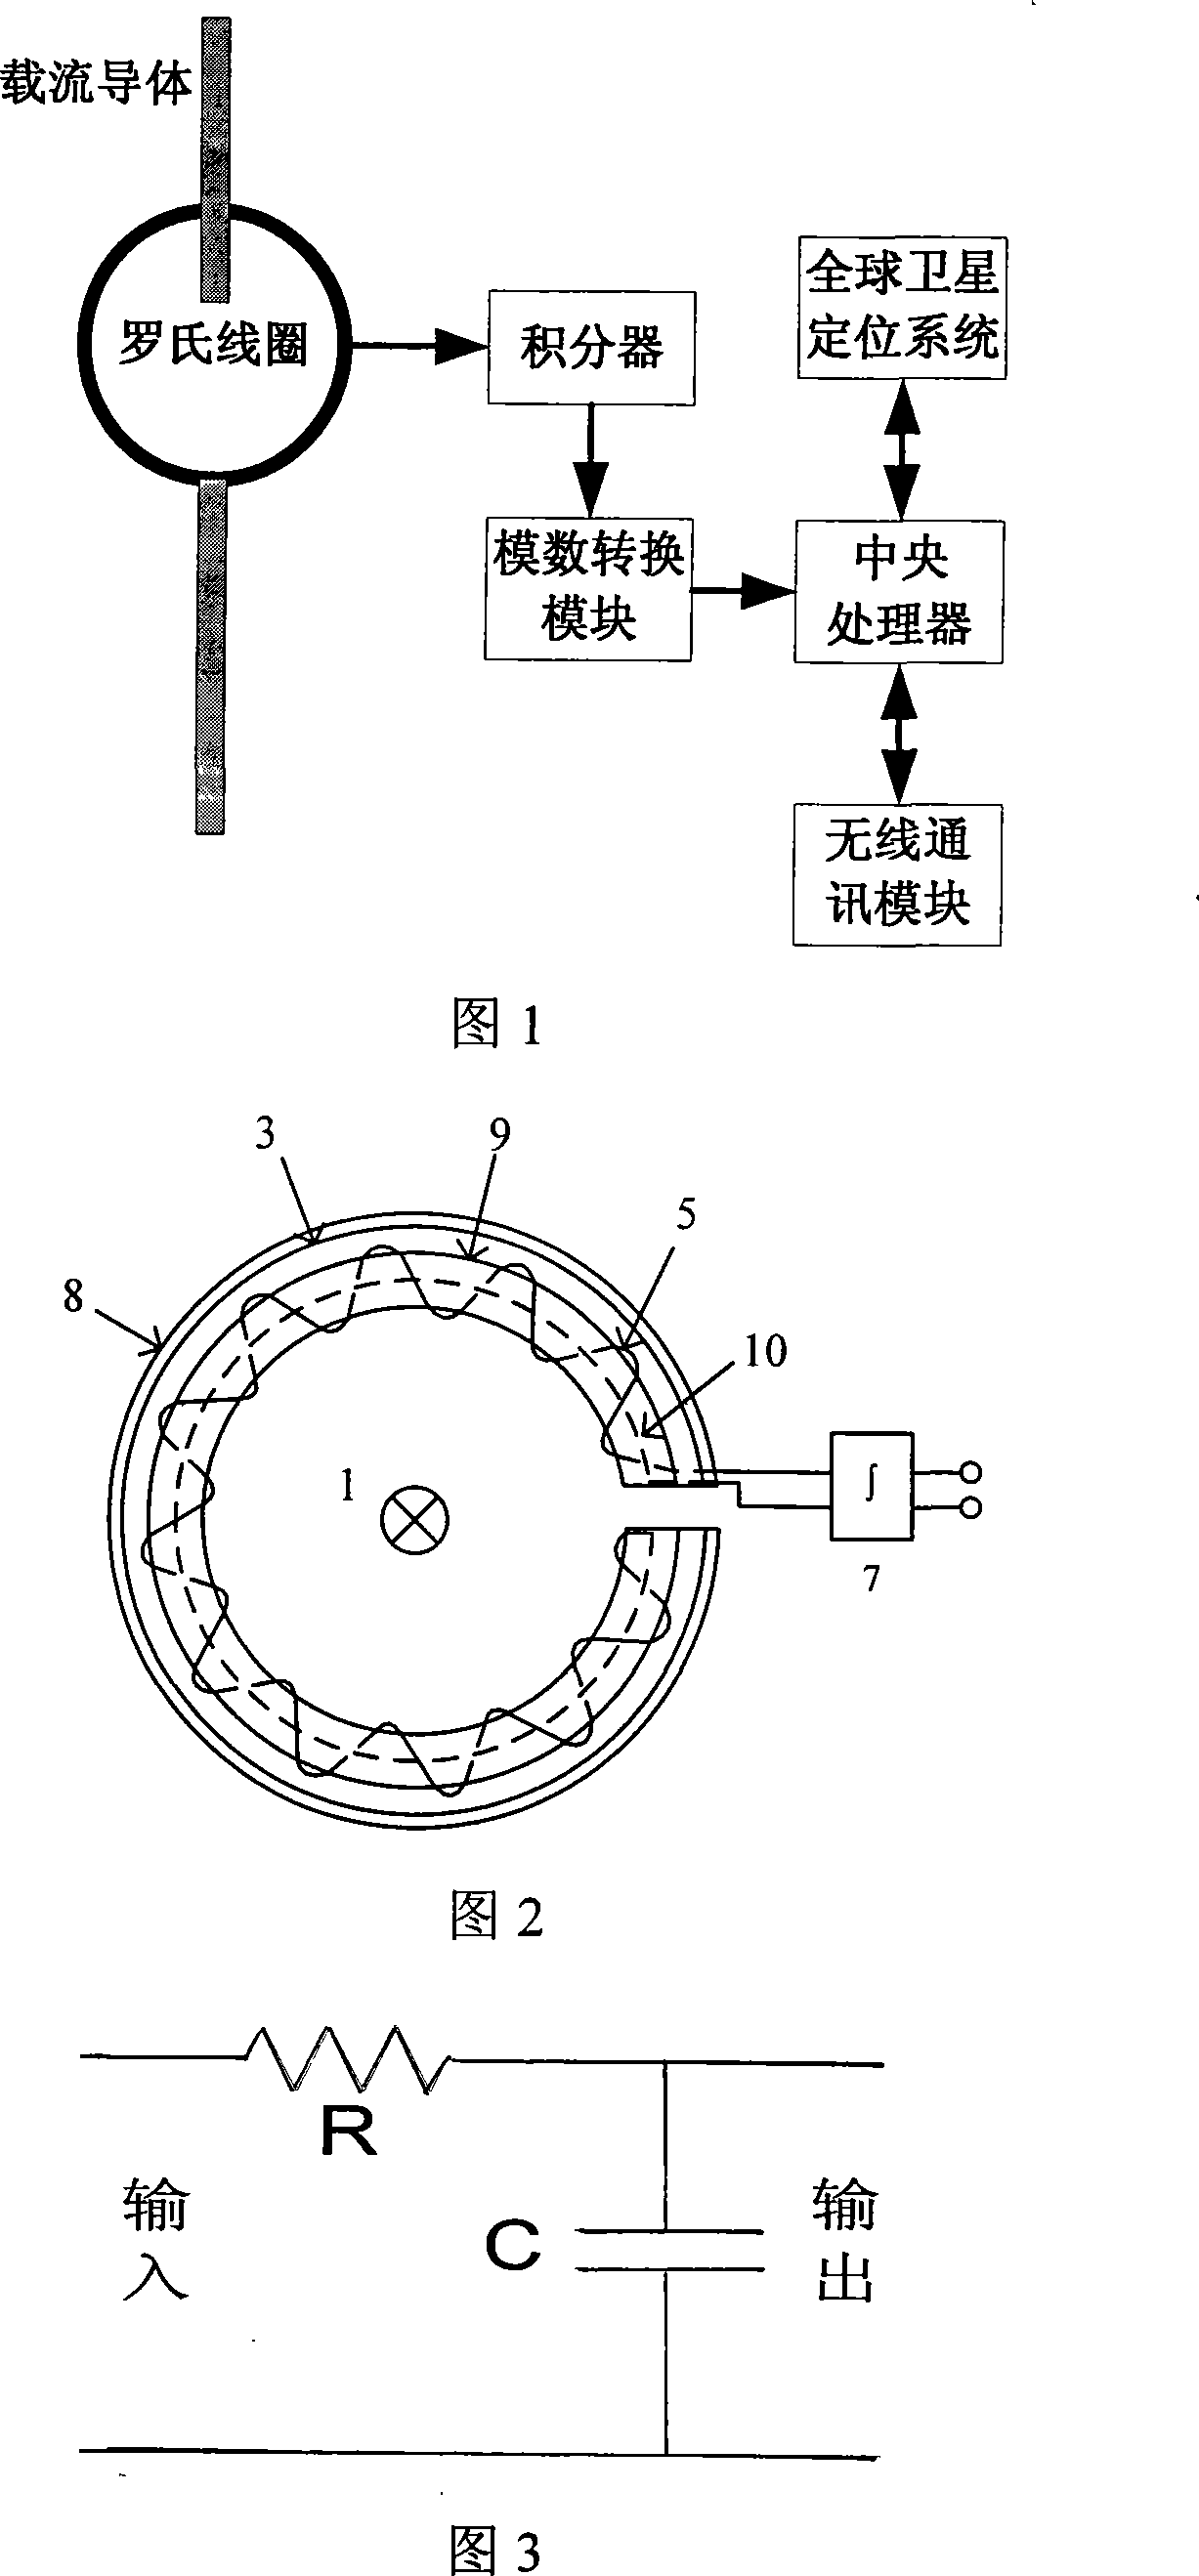 Impulse current measurement mechanism based on flexible Luo-coil